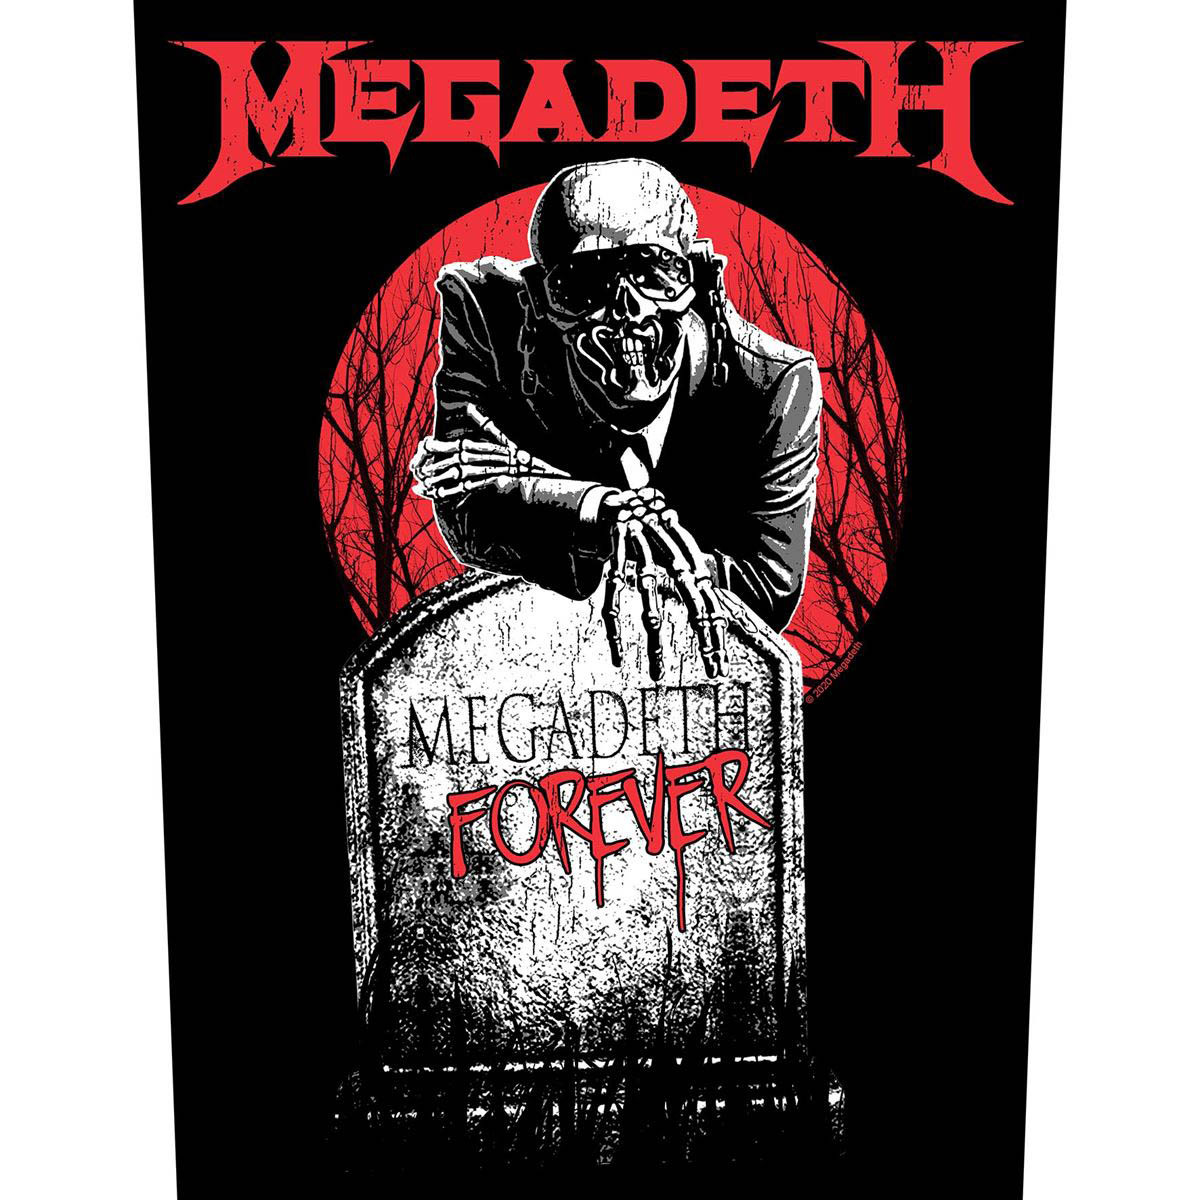 Megadeth rust in peace polaris текст фото 75